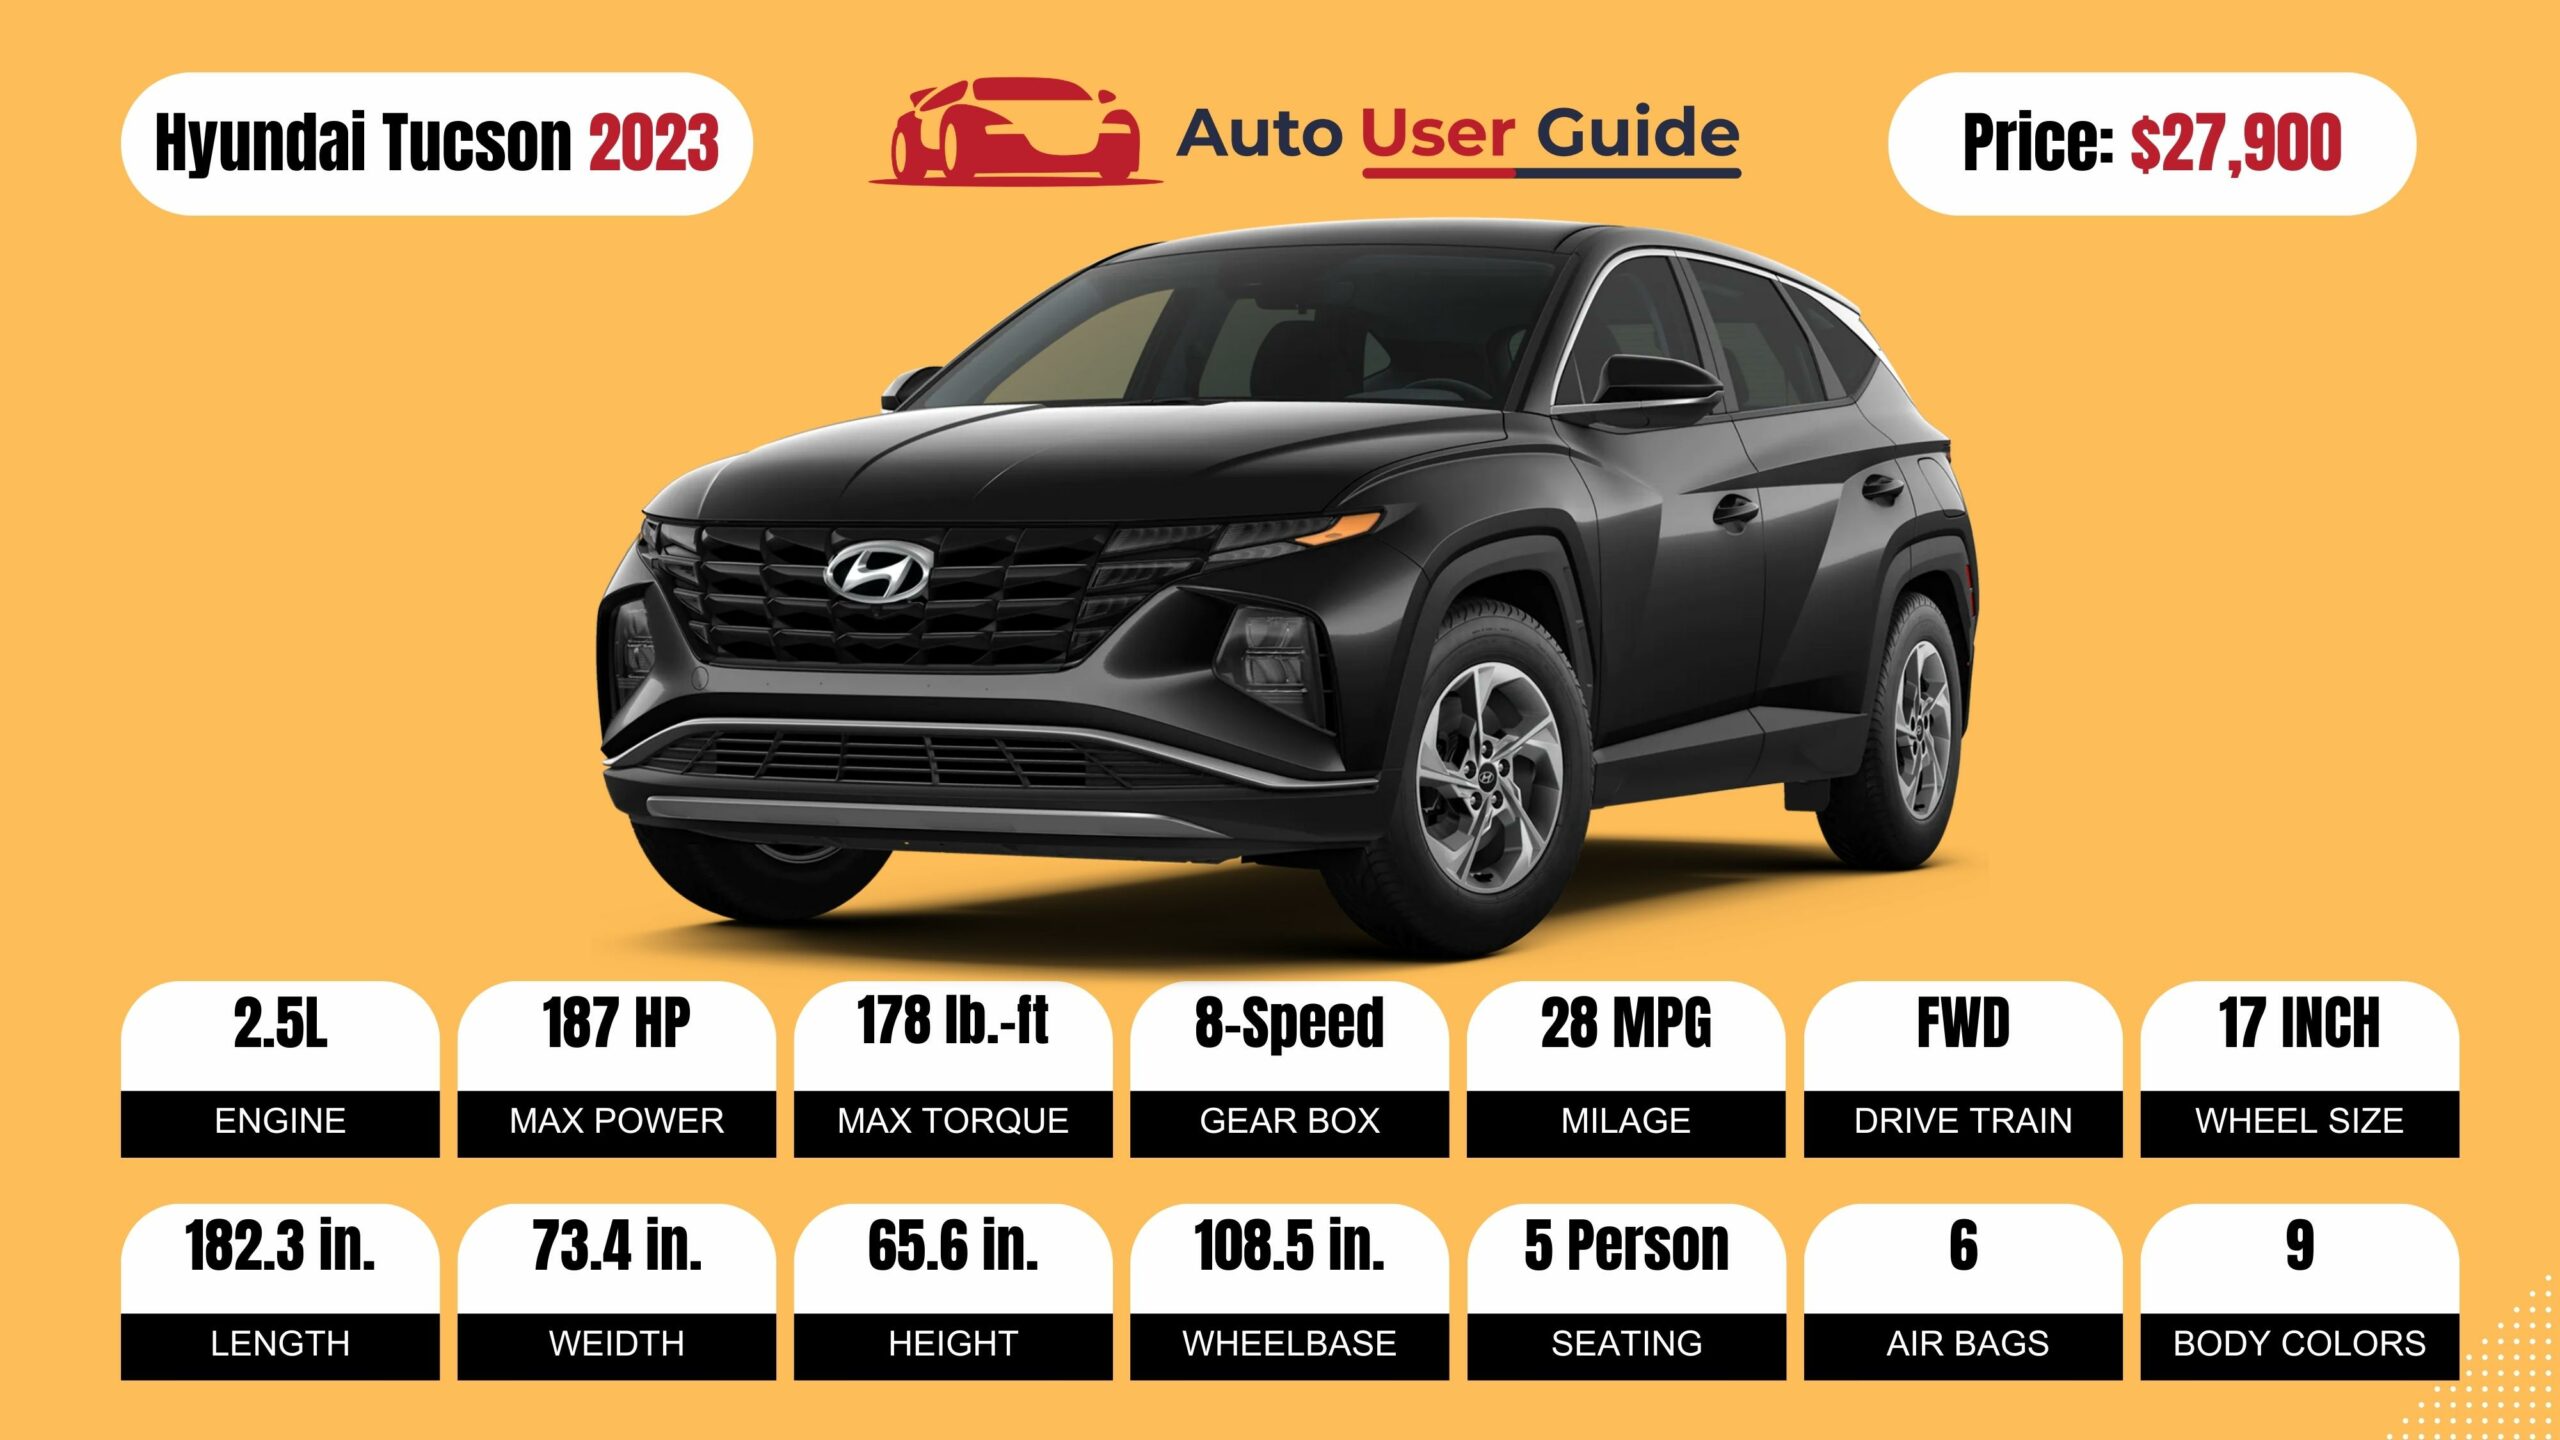 Hyundai Tucson Specs, Price, Features, Milage (brochure)